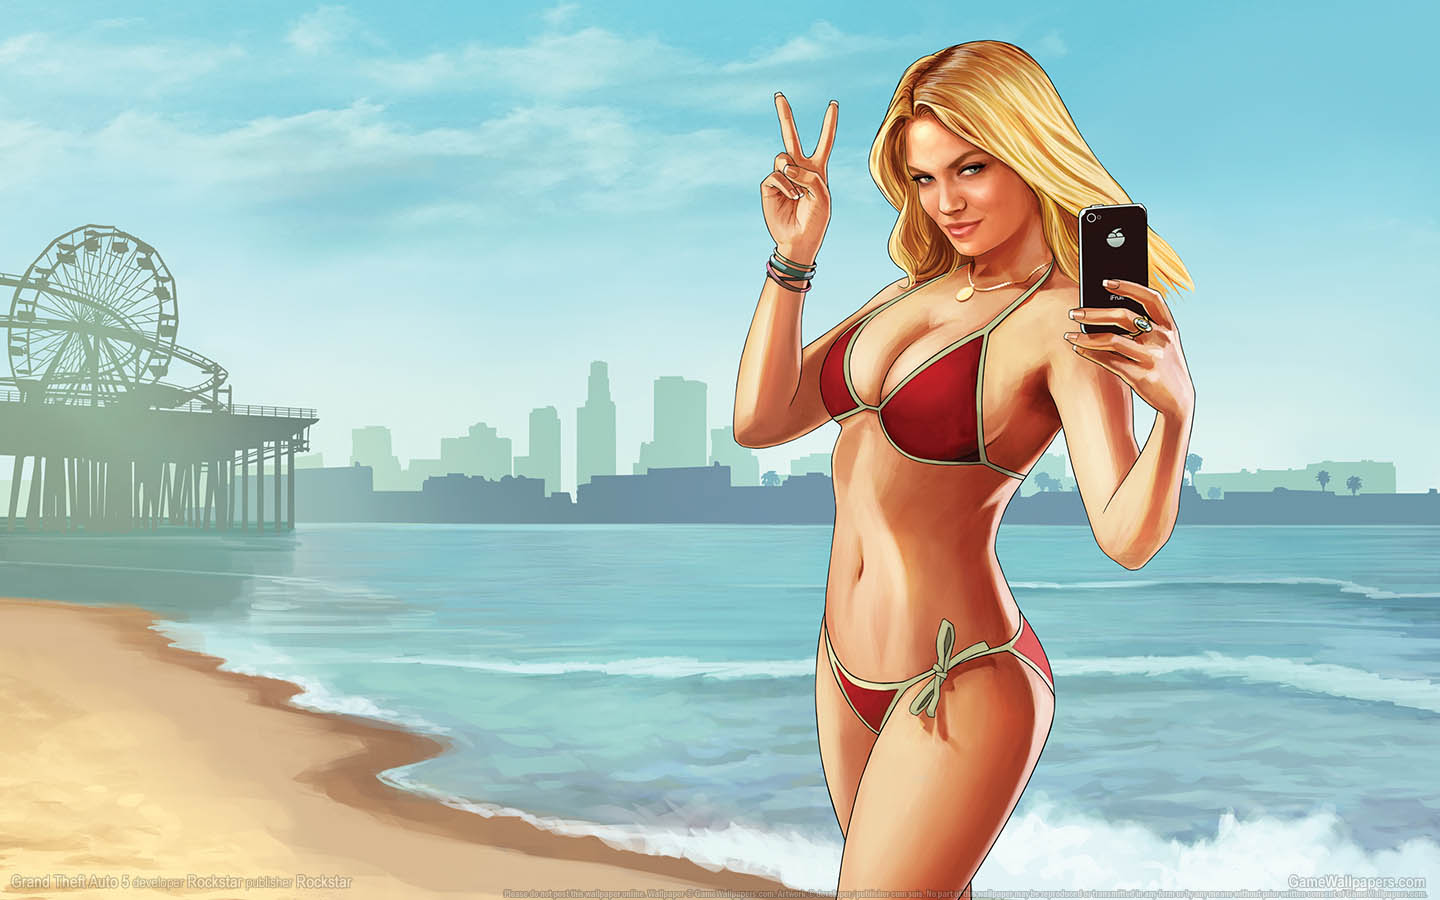 Grand Theft Auto 5 wallpaper 01 1440x900